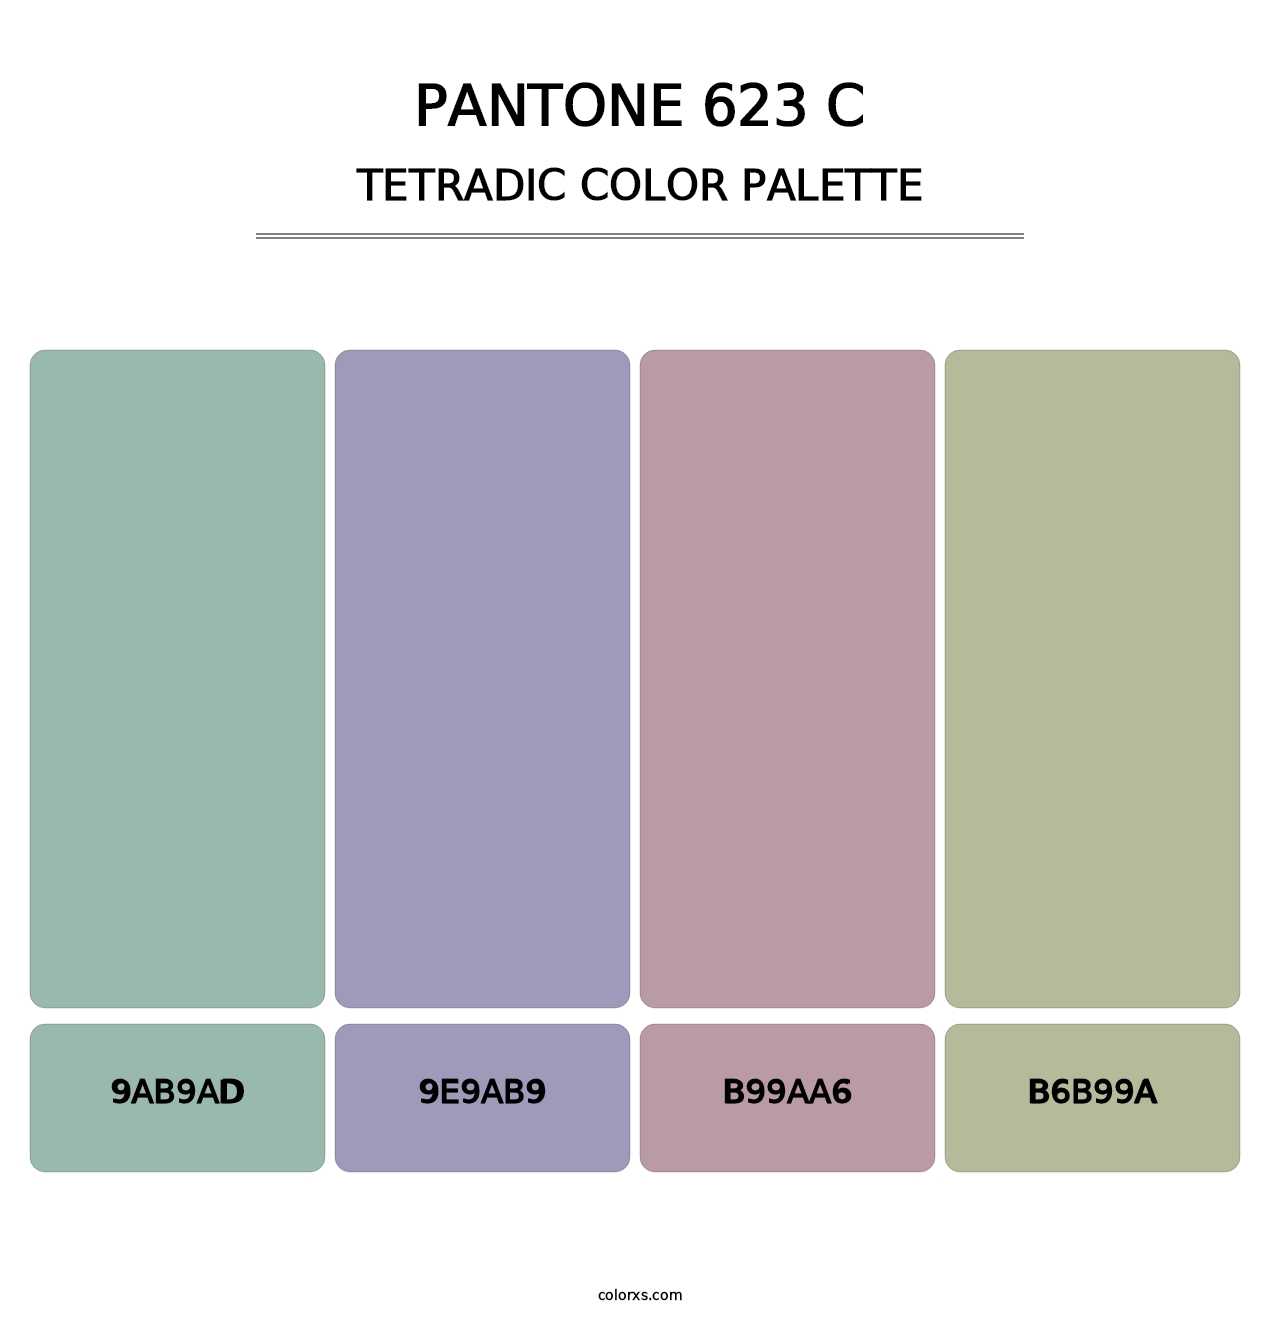 PANTONE 623 C - Tetradic Color Palette